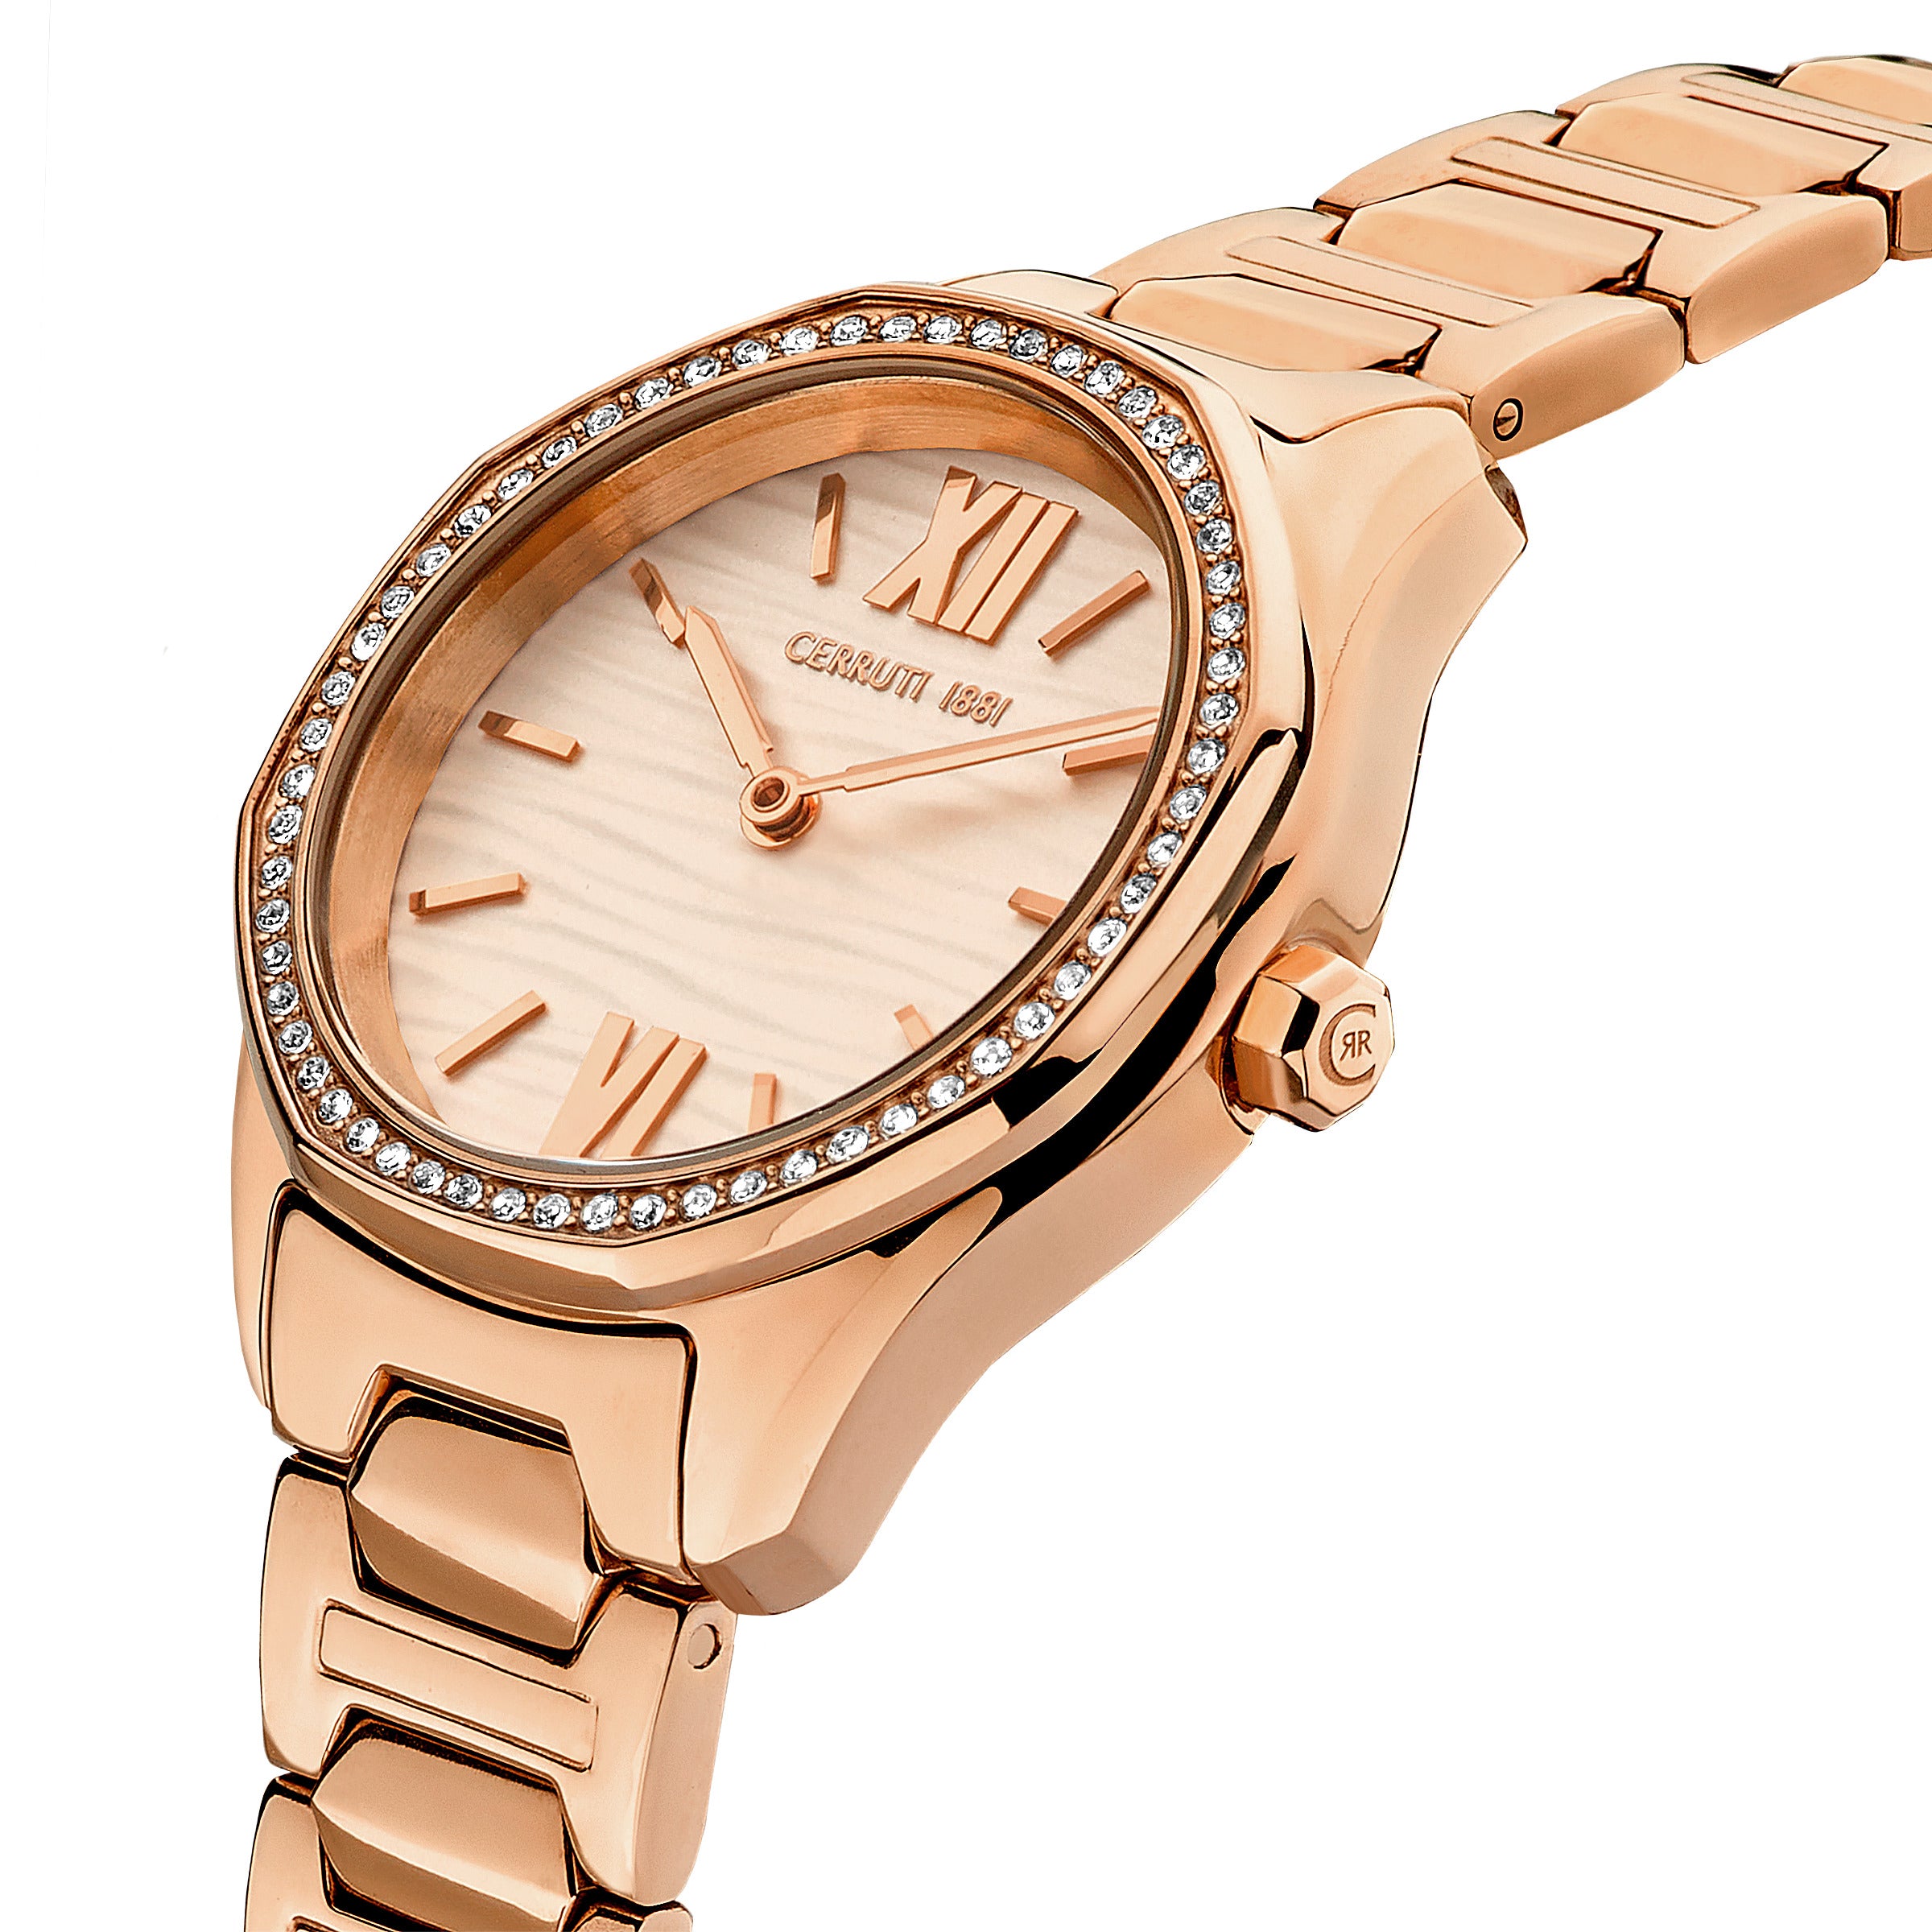 CERRUTI Women's Quartz Watch Rose Gold Dial - CER-0496